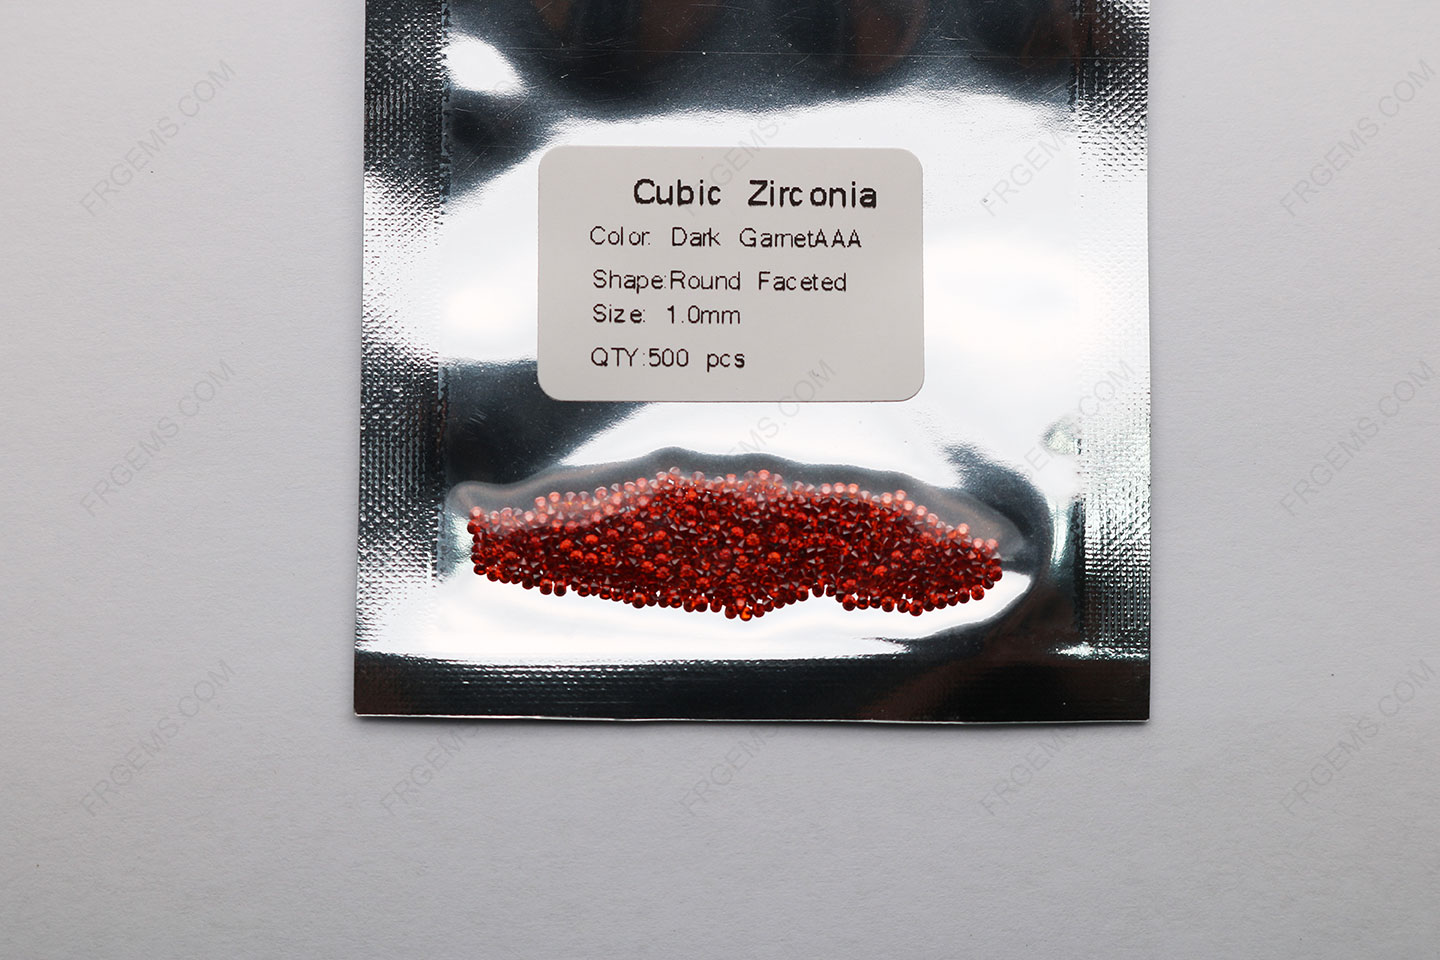 Cubic Zirconia Dark Garnet Redt Round Shape diamond faceted cut 1mm stones CZ23 IMG_3795